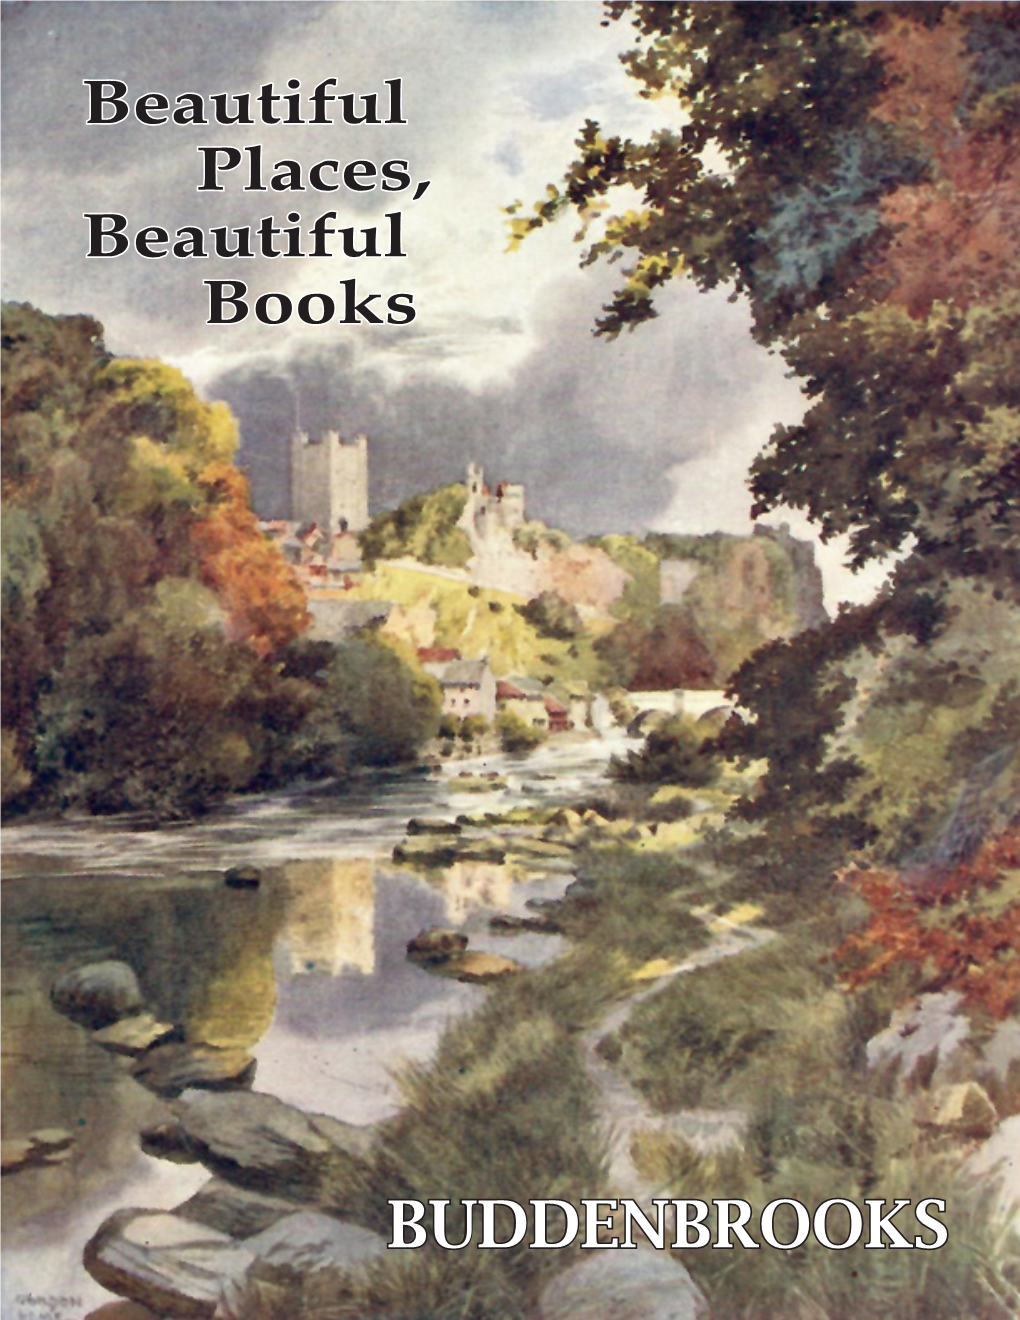 Buddenbrooks (617) 536-4433 - 1 - Info@Buddenbrooks.Com Beautiful Places Beautiful Books